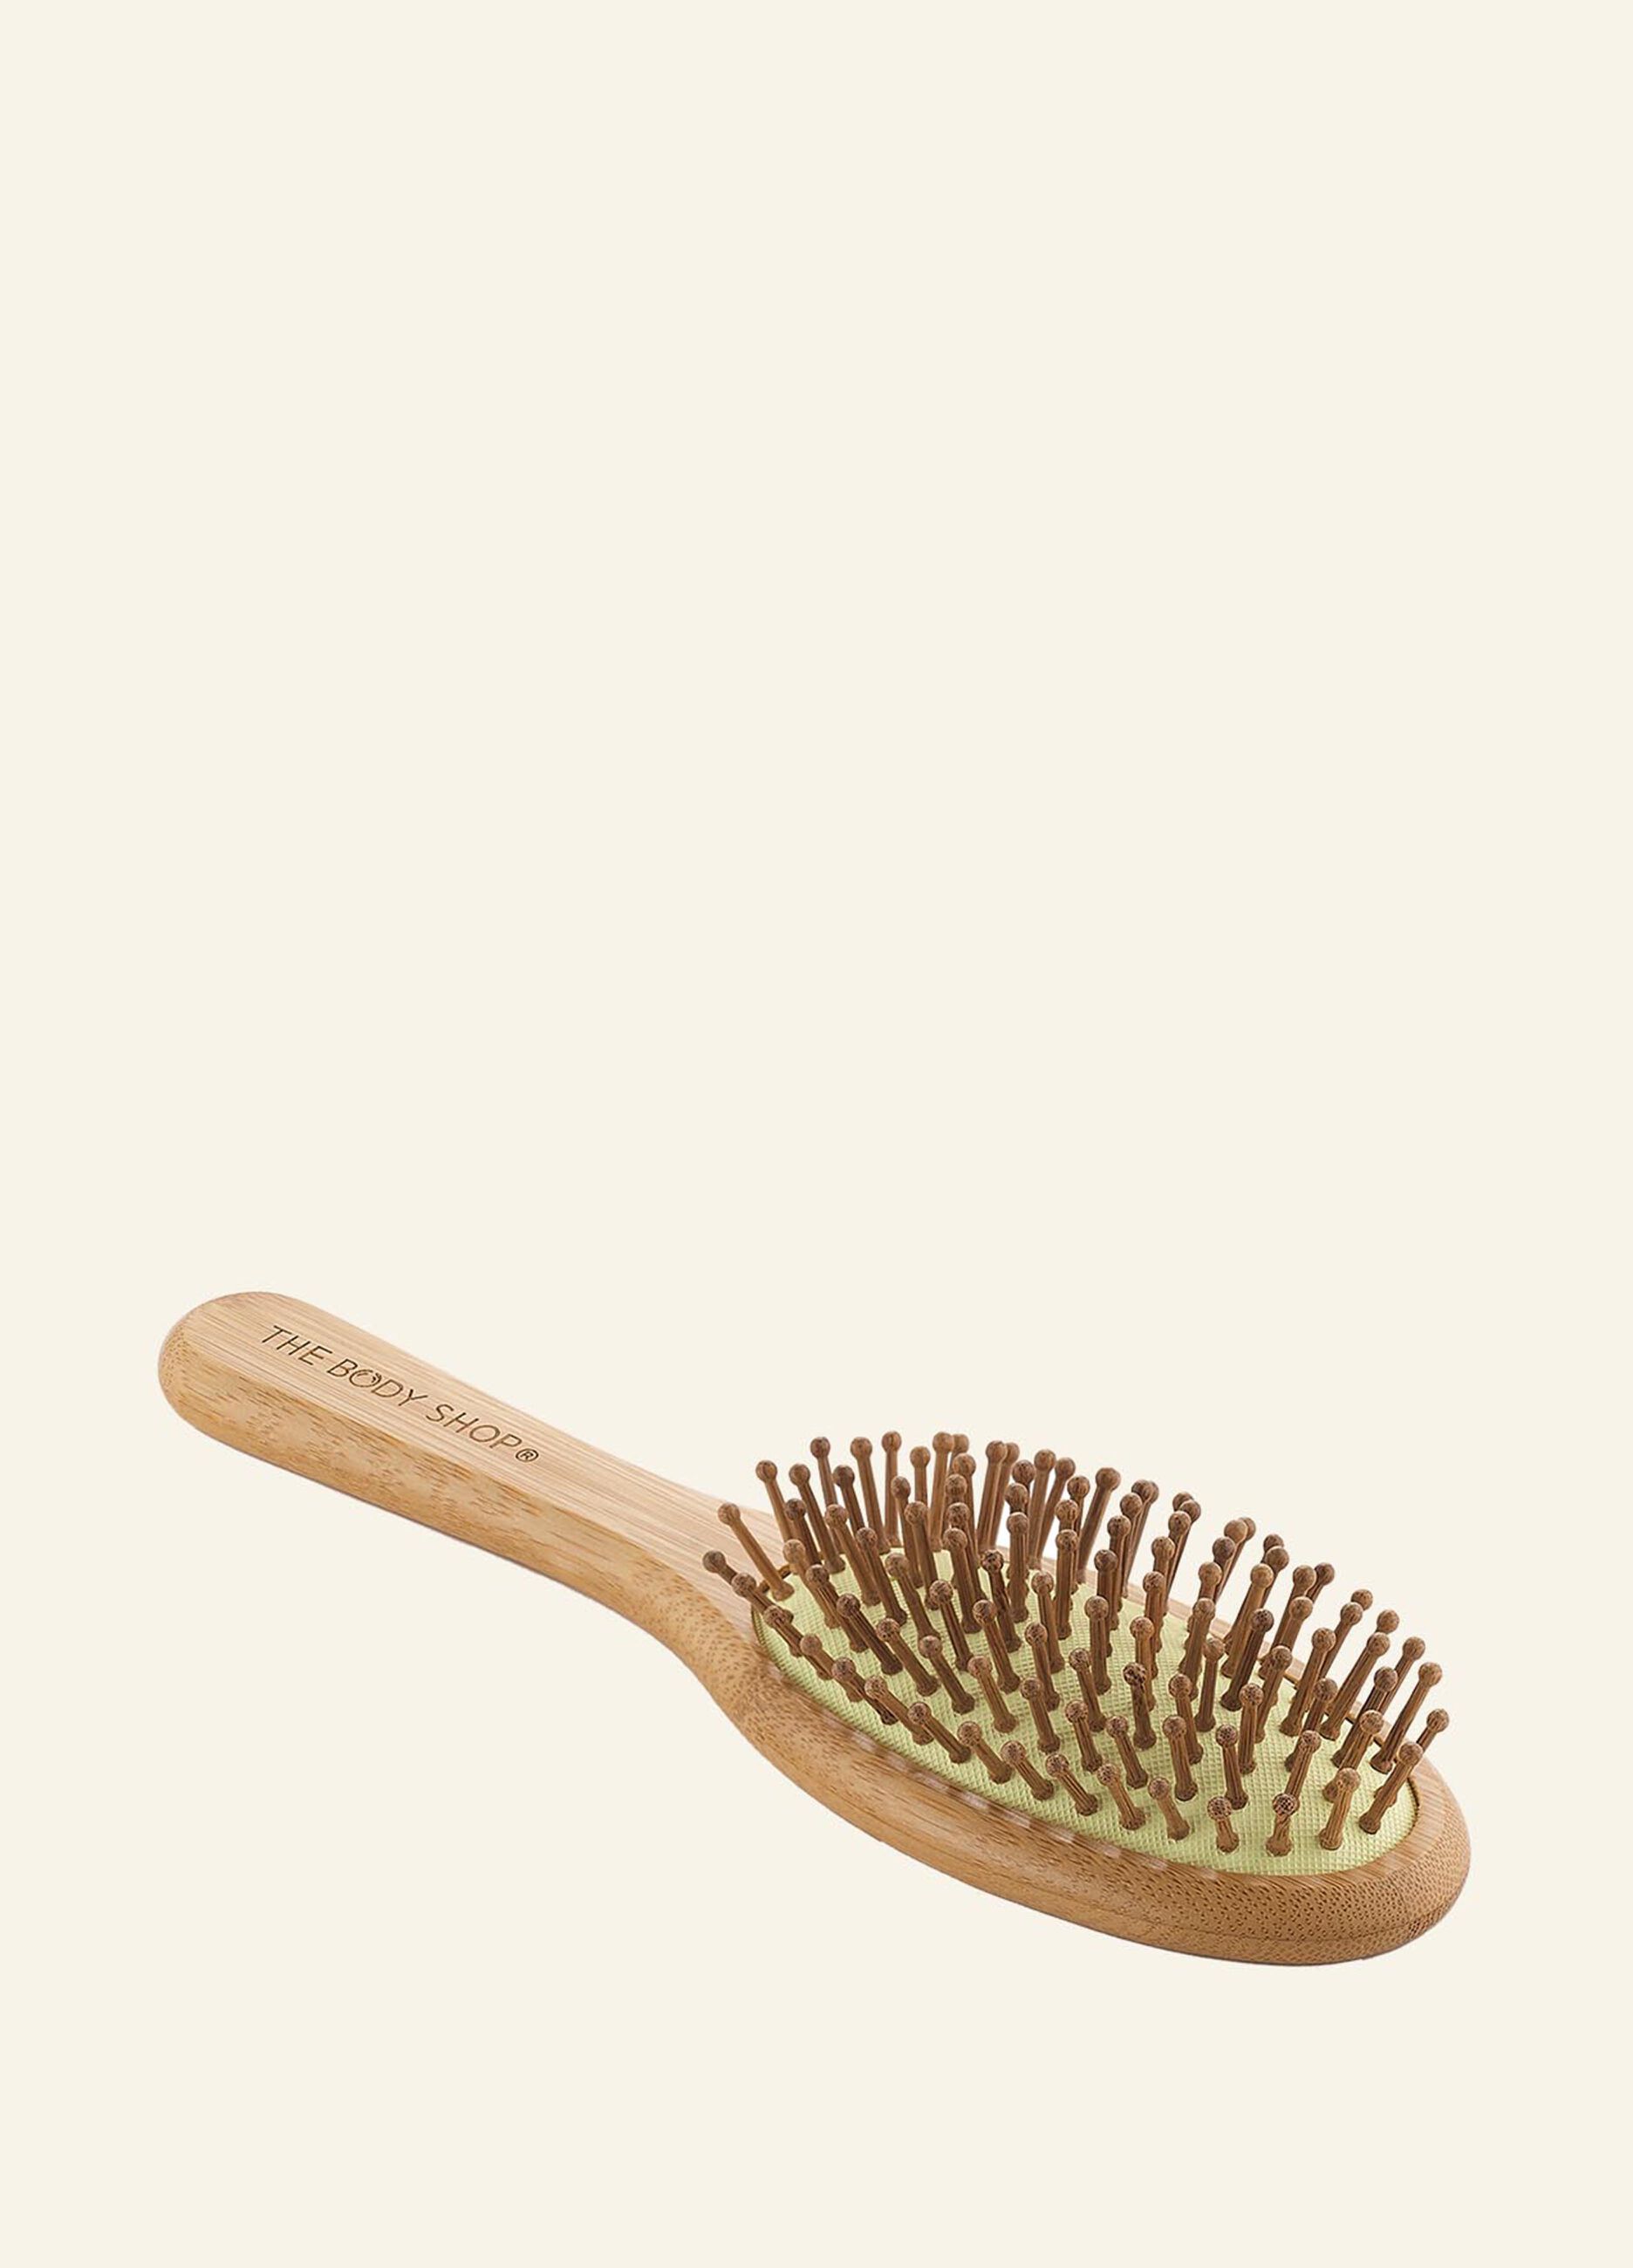 The Body Shop oval bamboo hair brush